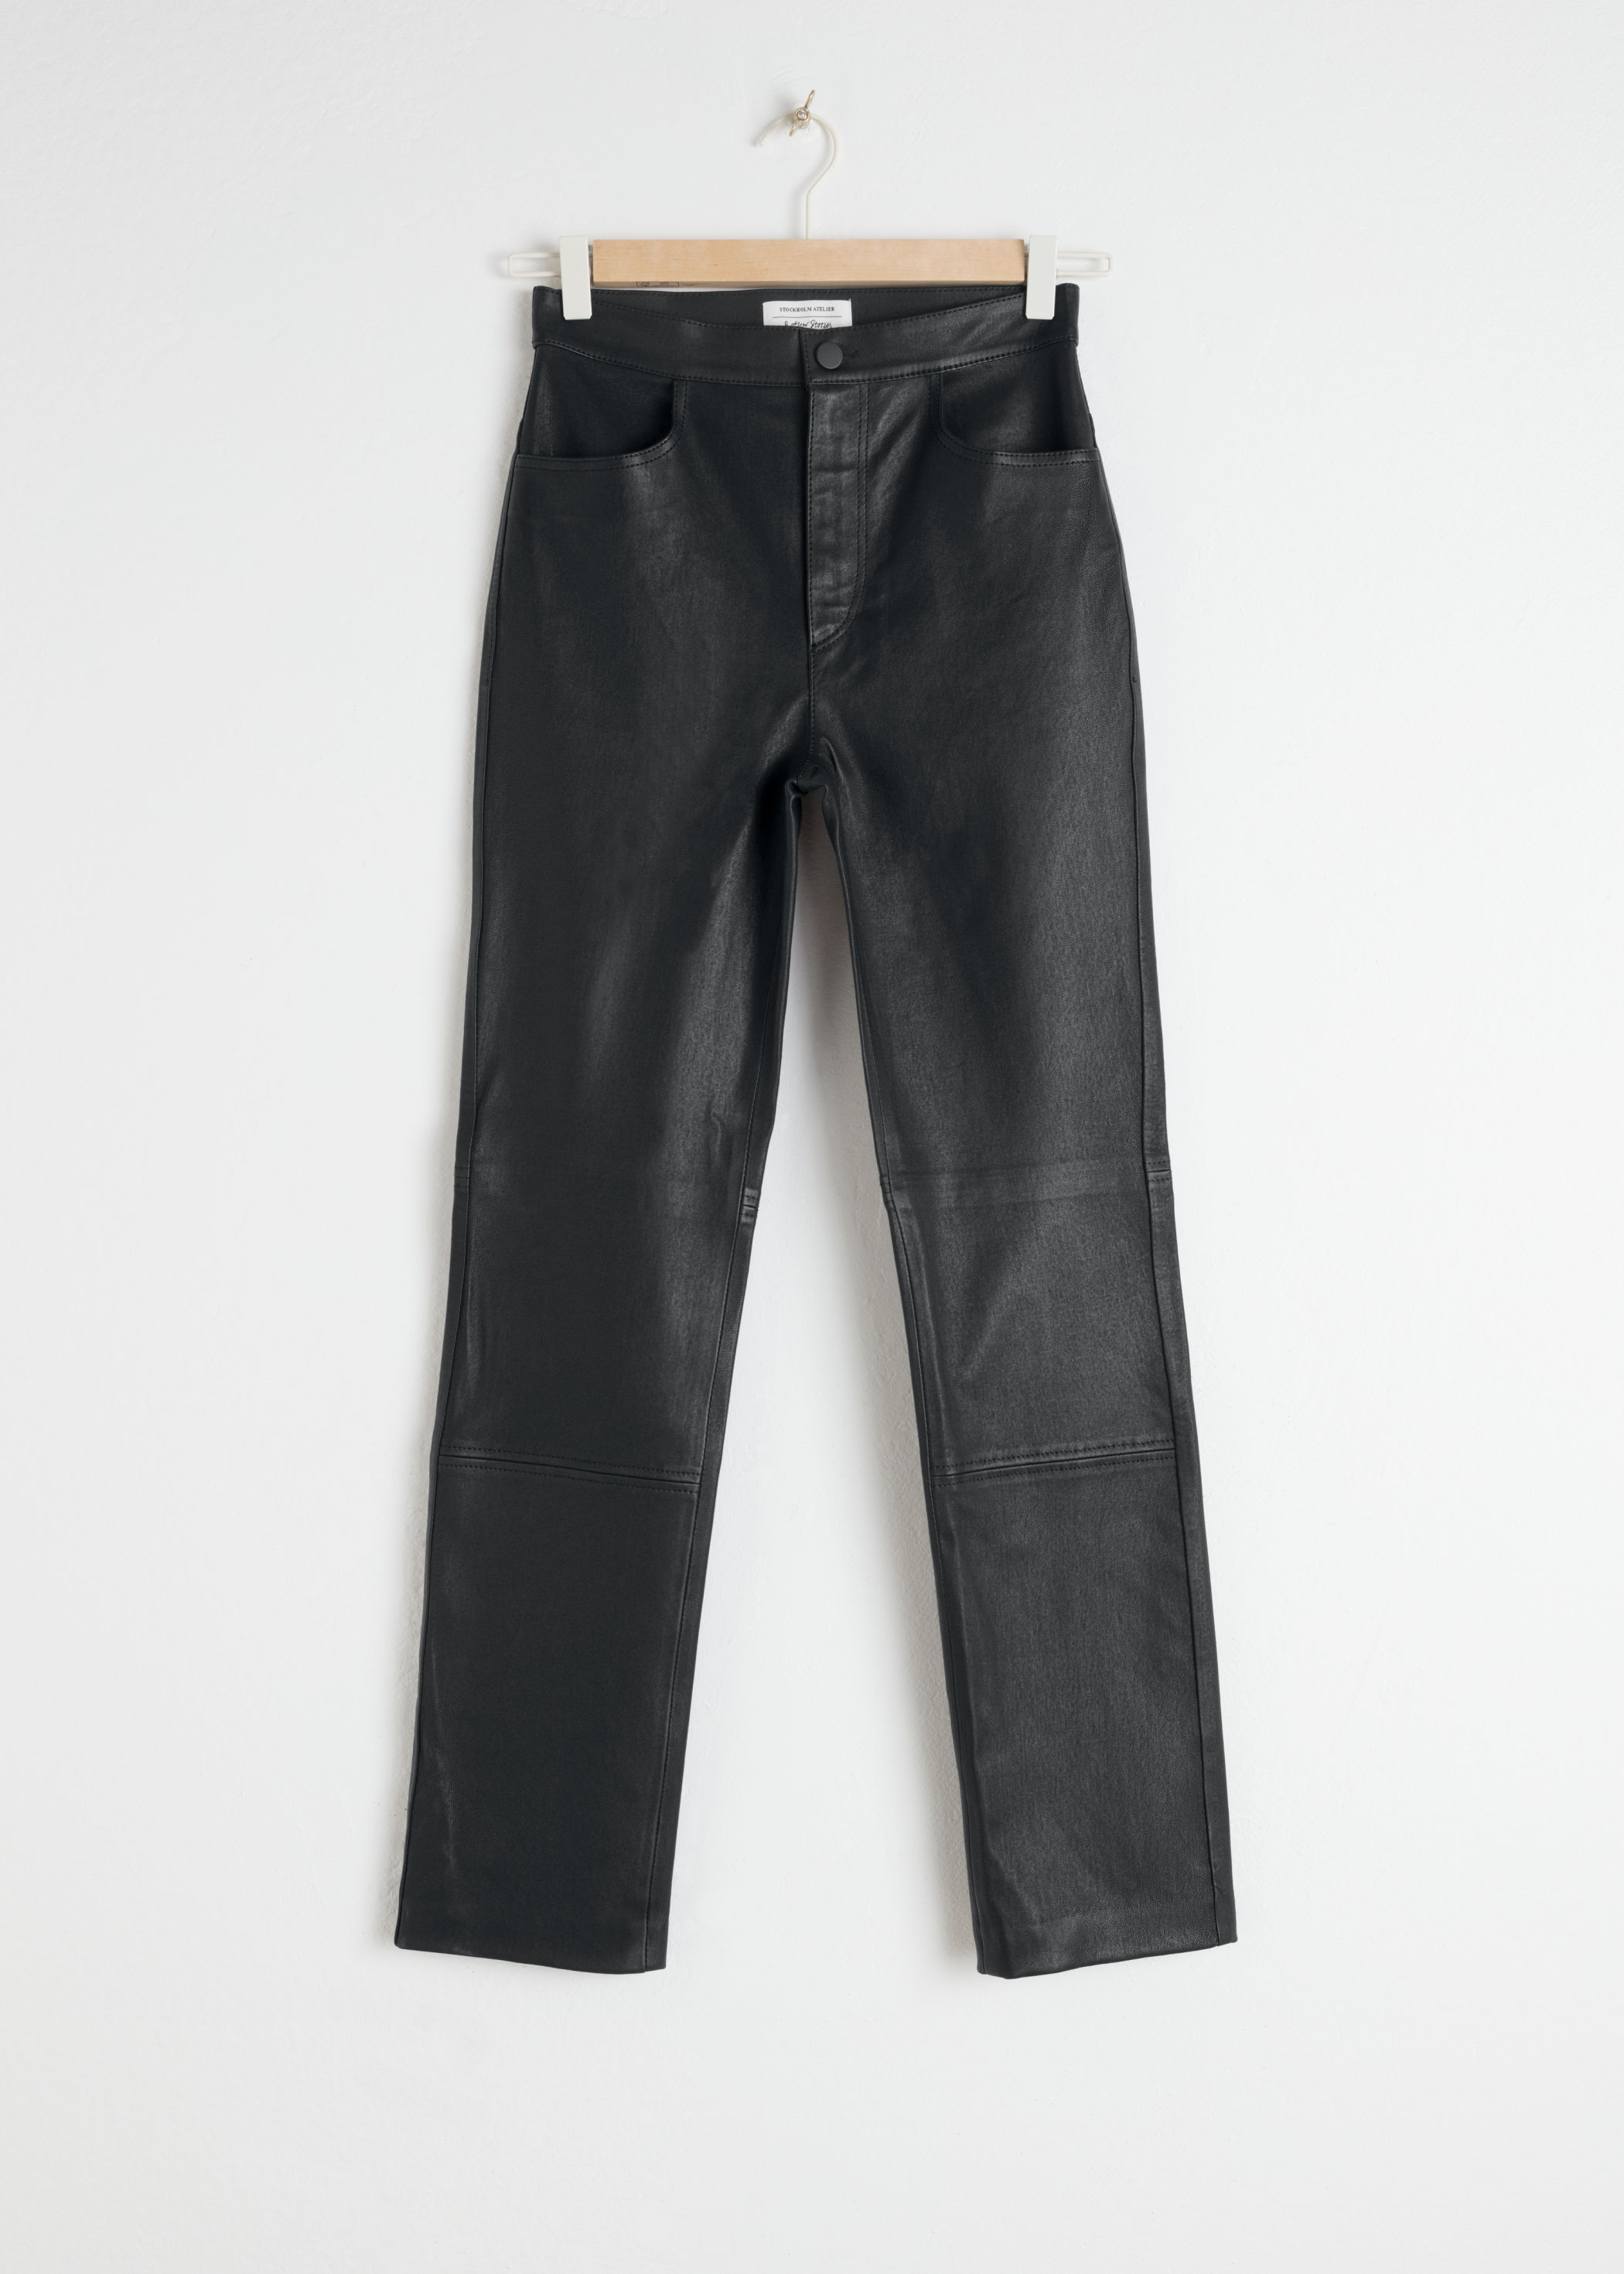 High Waisted Black Leather Pants